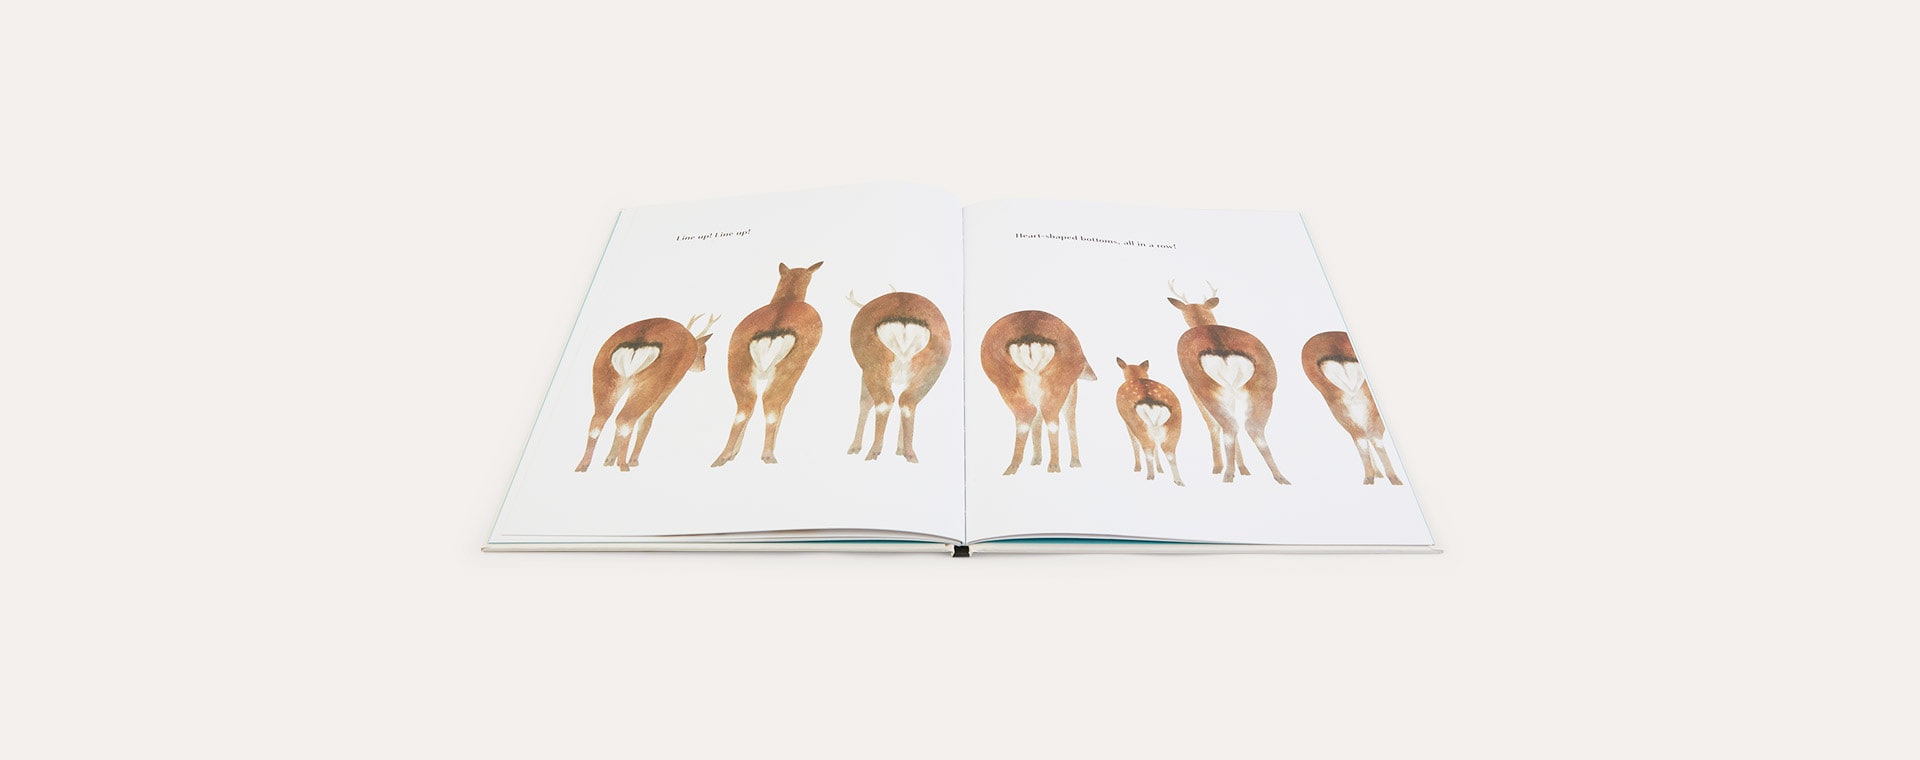 Multi bookspeed Animals Brag About Their Bottoms